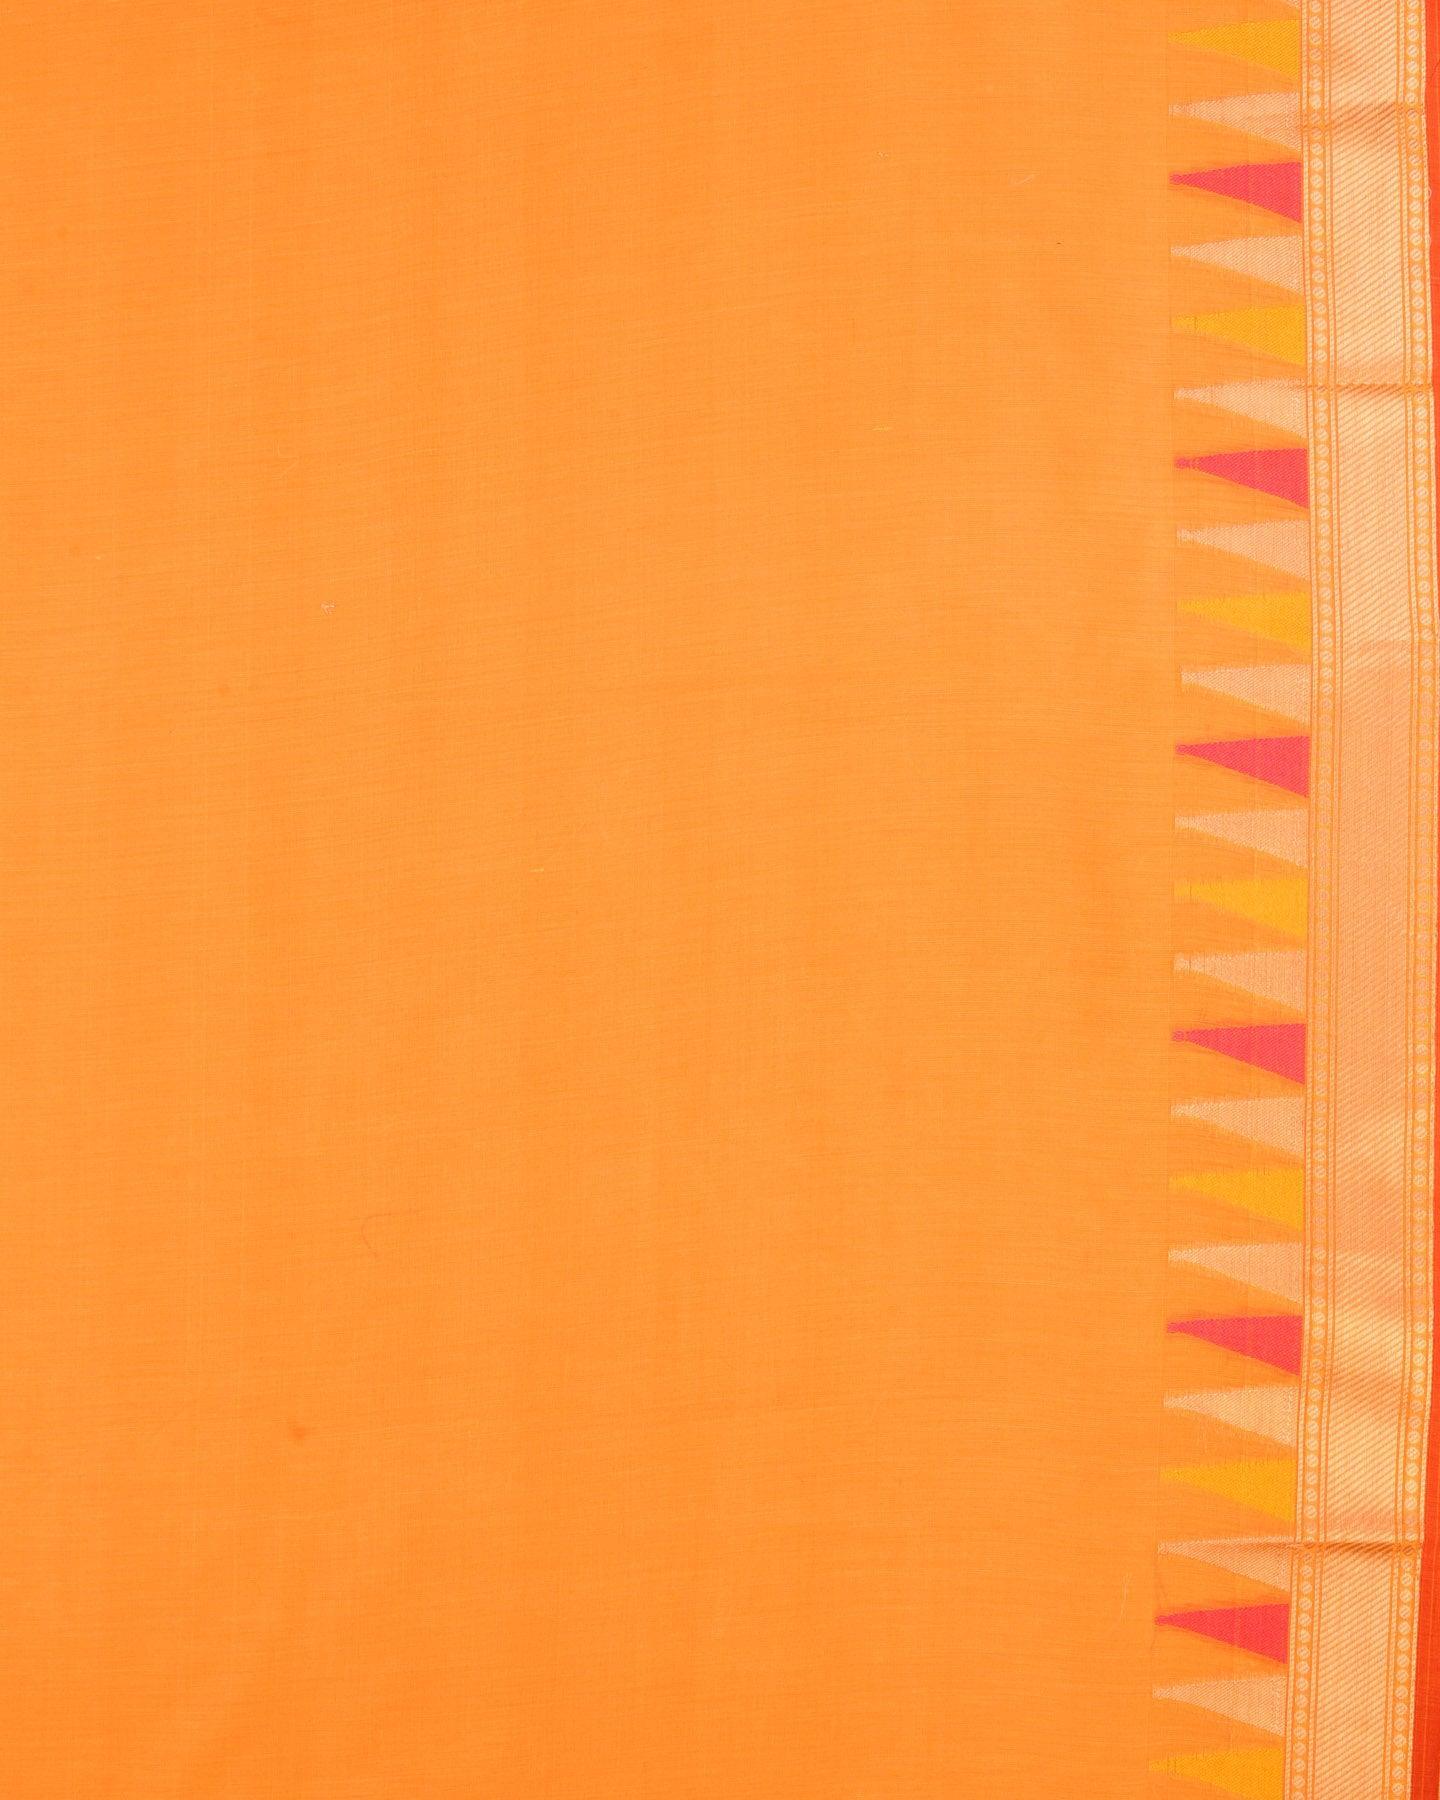 Orange Banarasi Resham Buti Cutwork Brocade Woven Cotton Silk Saree with Temple Border - By HolyWeaves, Benares